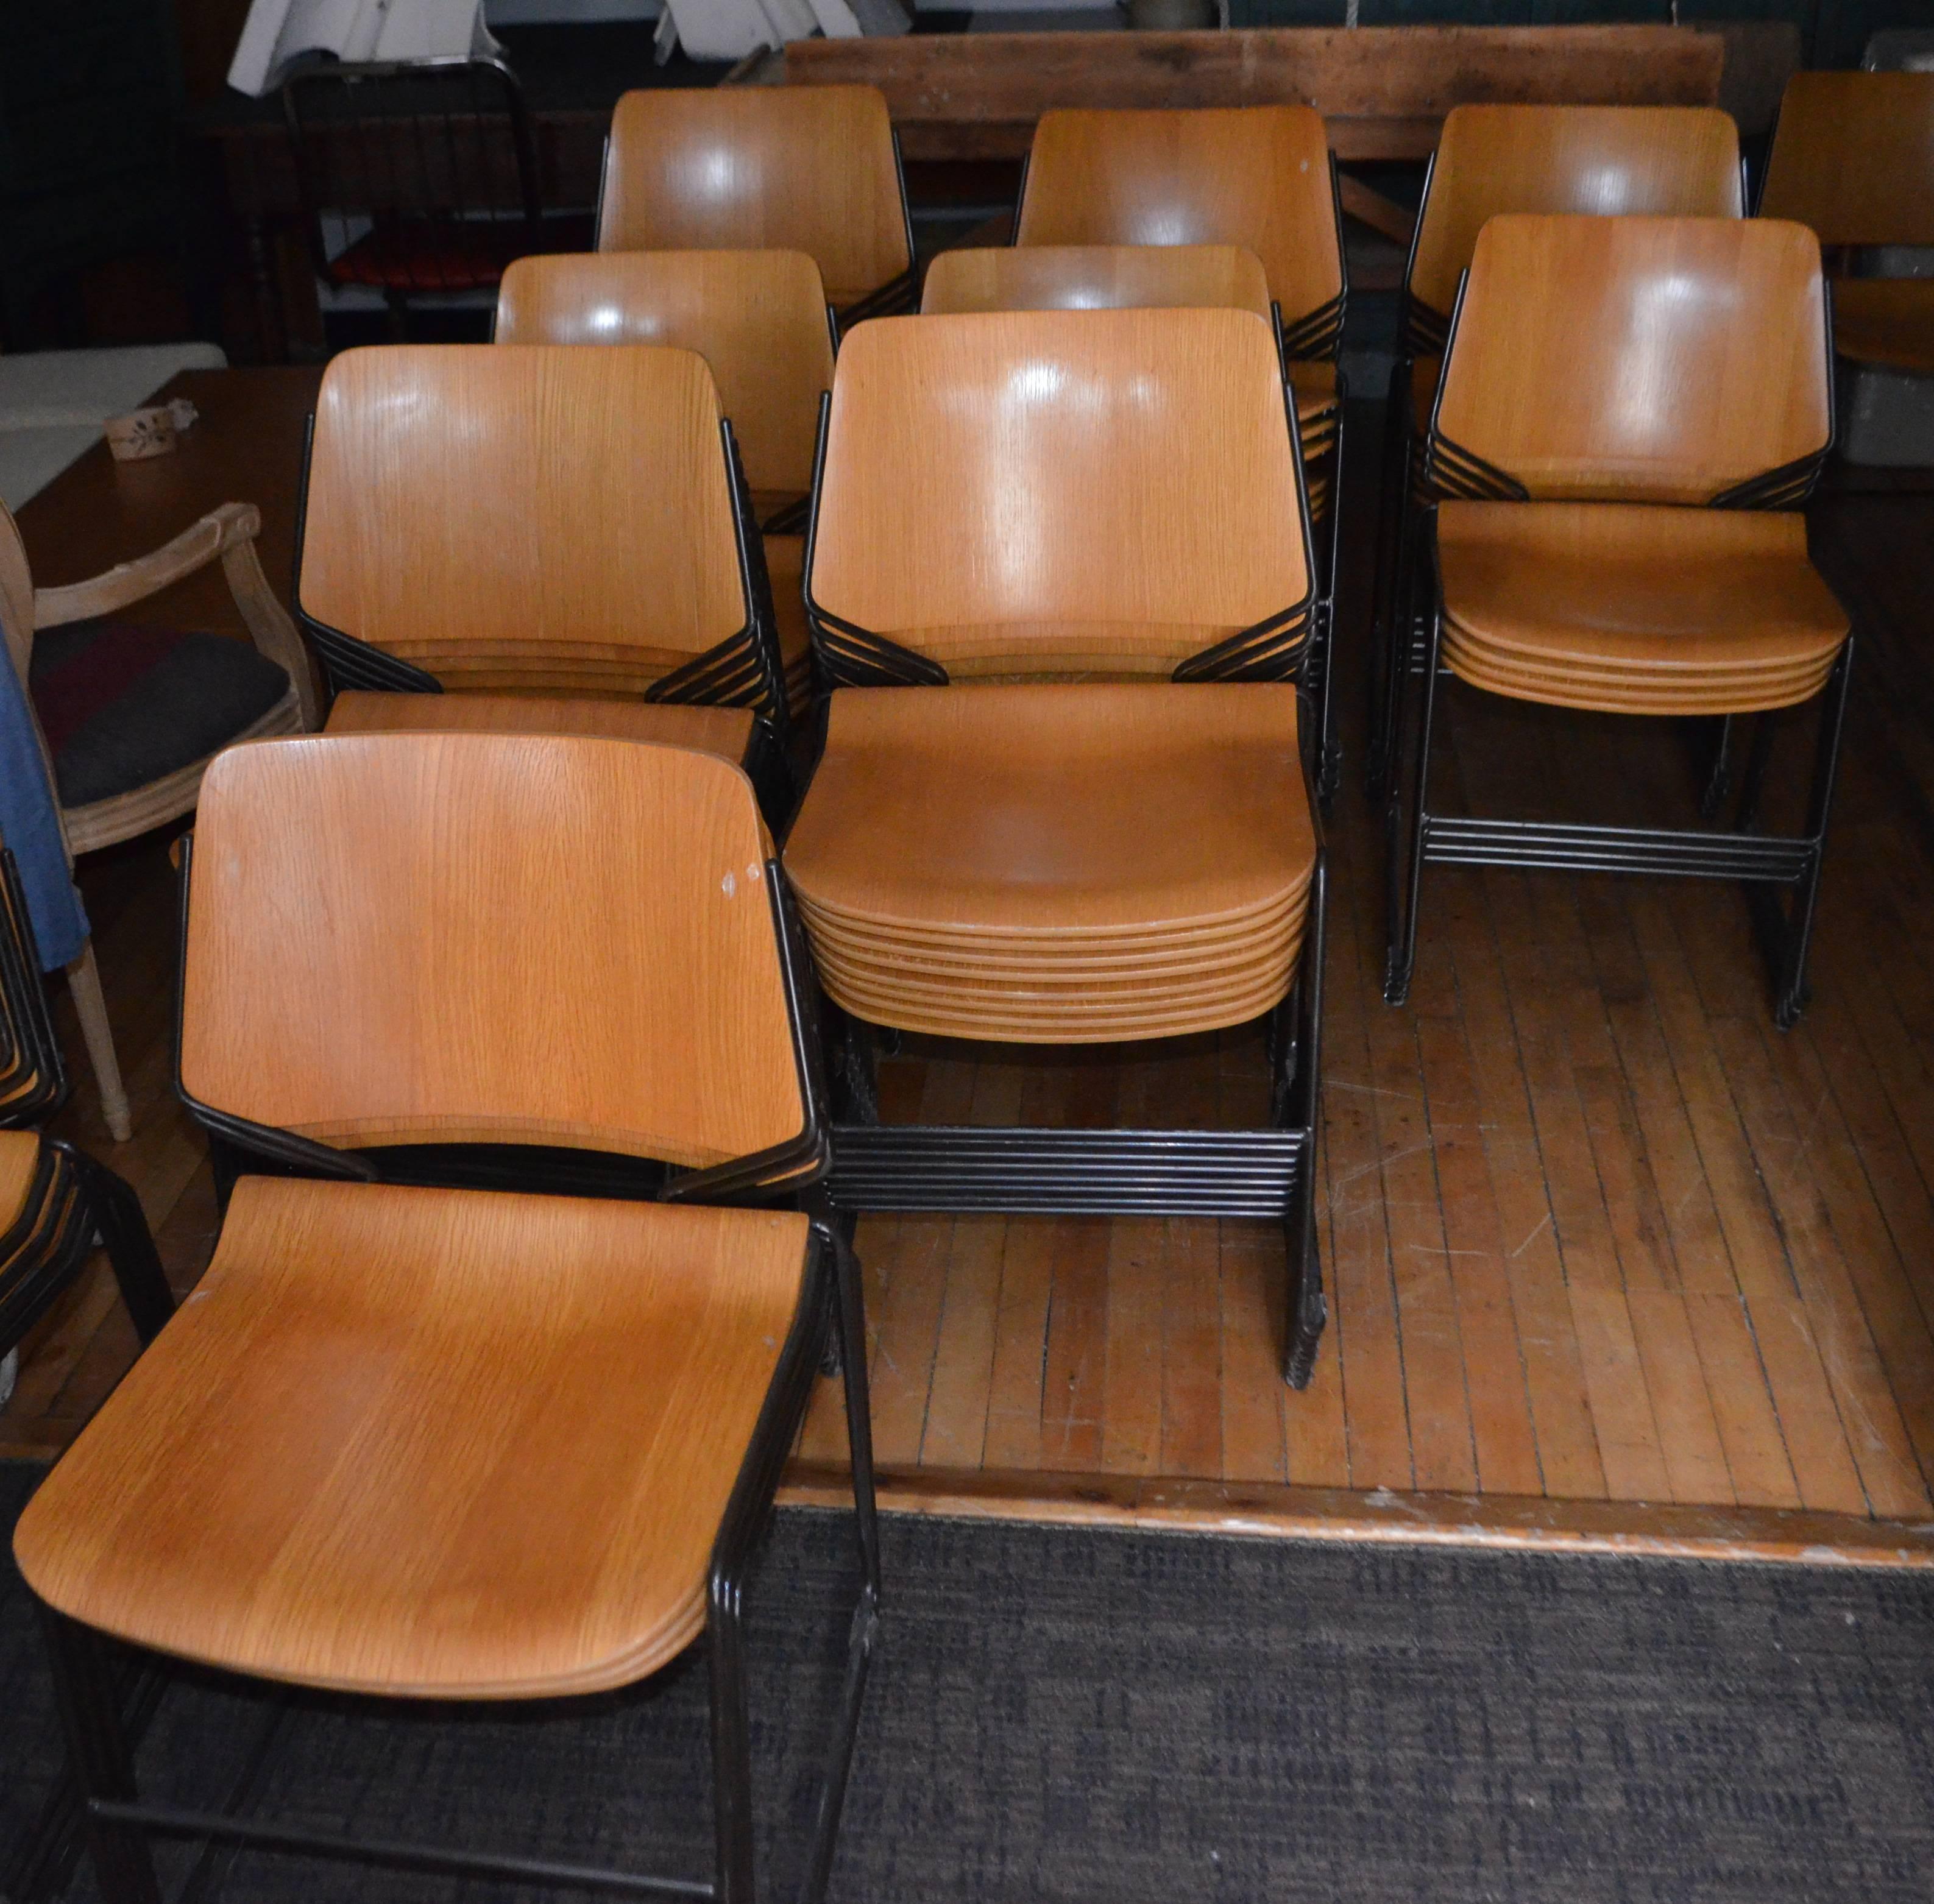 Lot of 60 Vintage Dining Room Chairs w/Oak Veneer Seats; priced individually 2